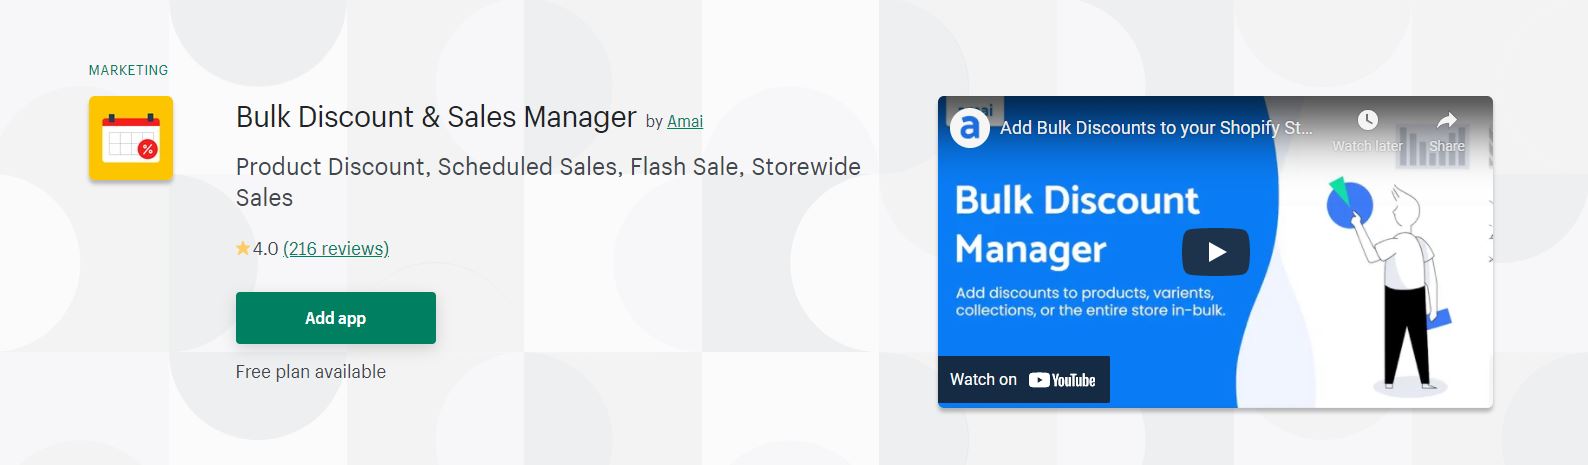 Bulk Discount & Sales Manager